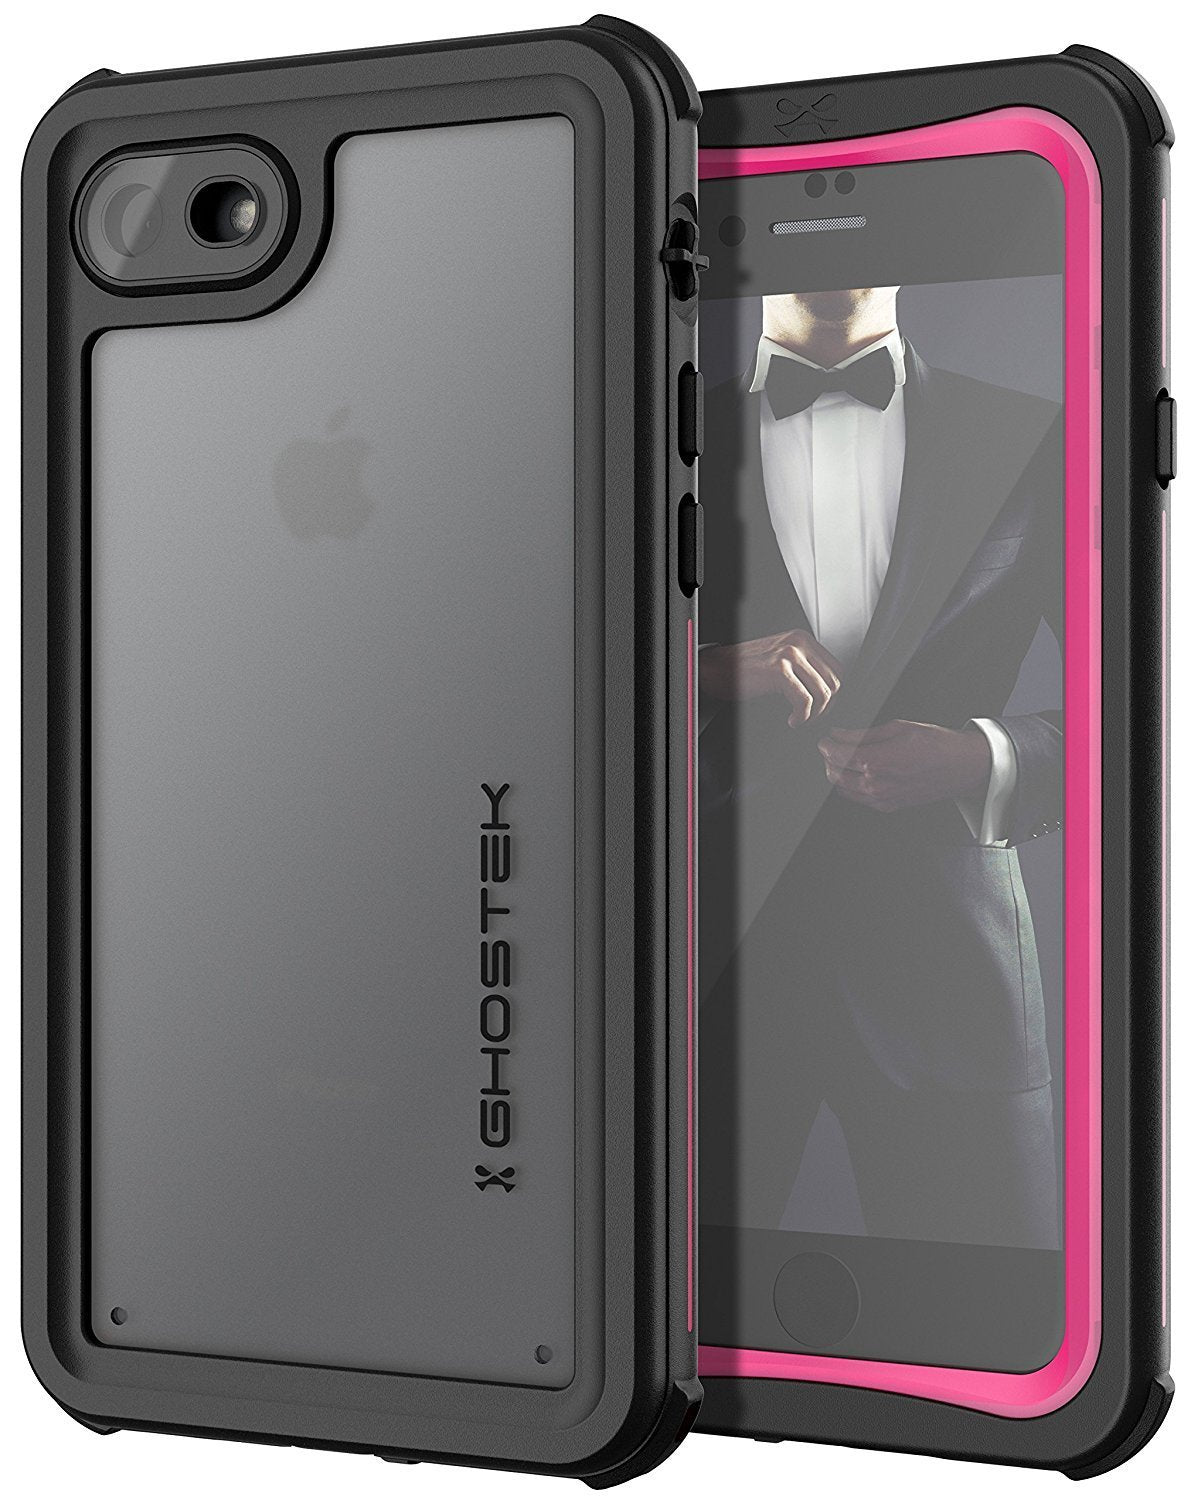 iPhone  7  Waterproof Case, Ghostek Nautical Series for iPhone  7  | Slim Underwater Protection | Adventure Duty | Ultra Fit | Swimming (Pink)